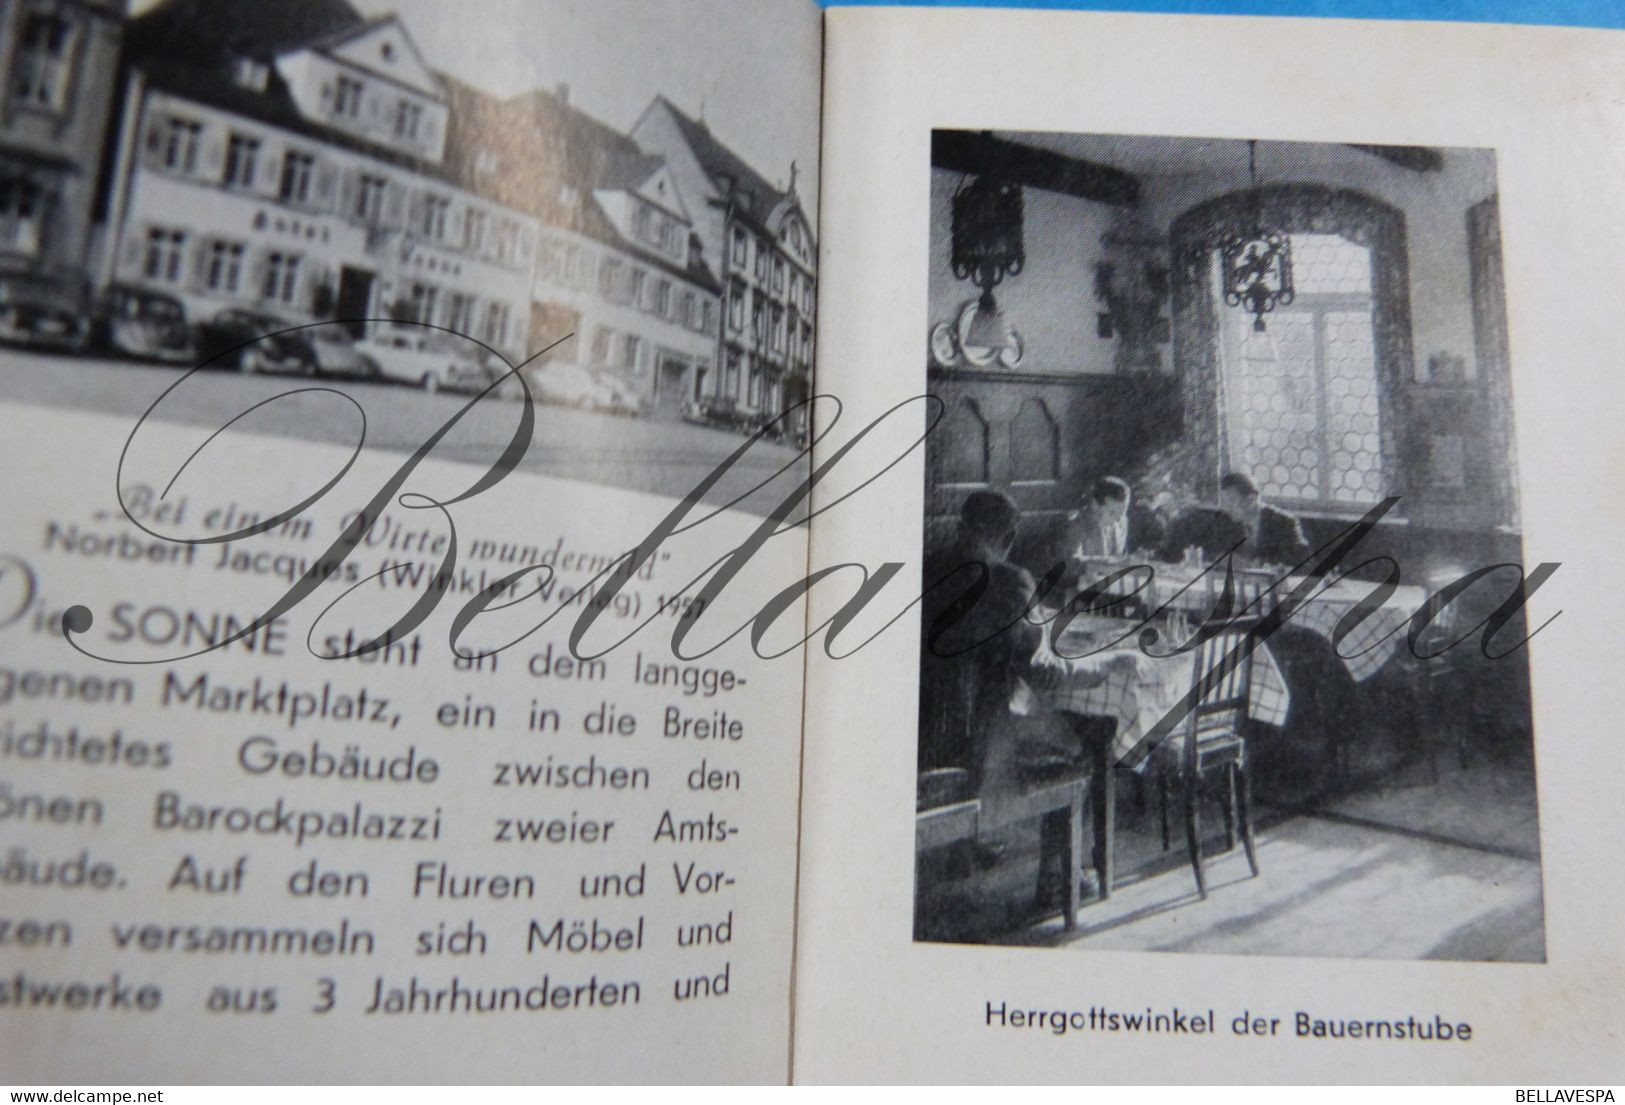 Offenburg - Propr. Besitser  Karl Schimph Hotel Sonne - Petite Livre 16 Pages.- - Posters